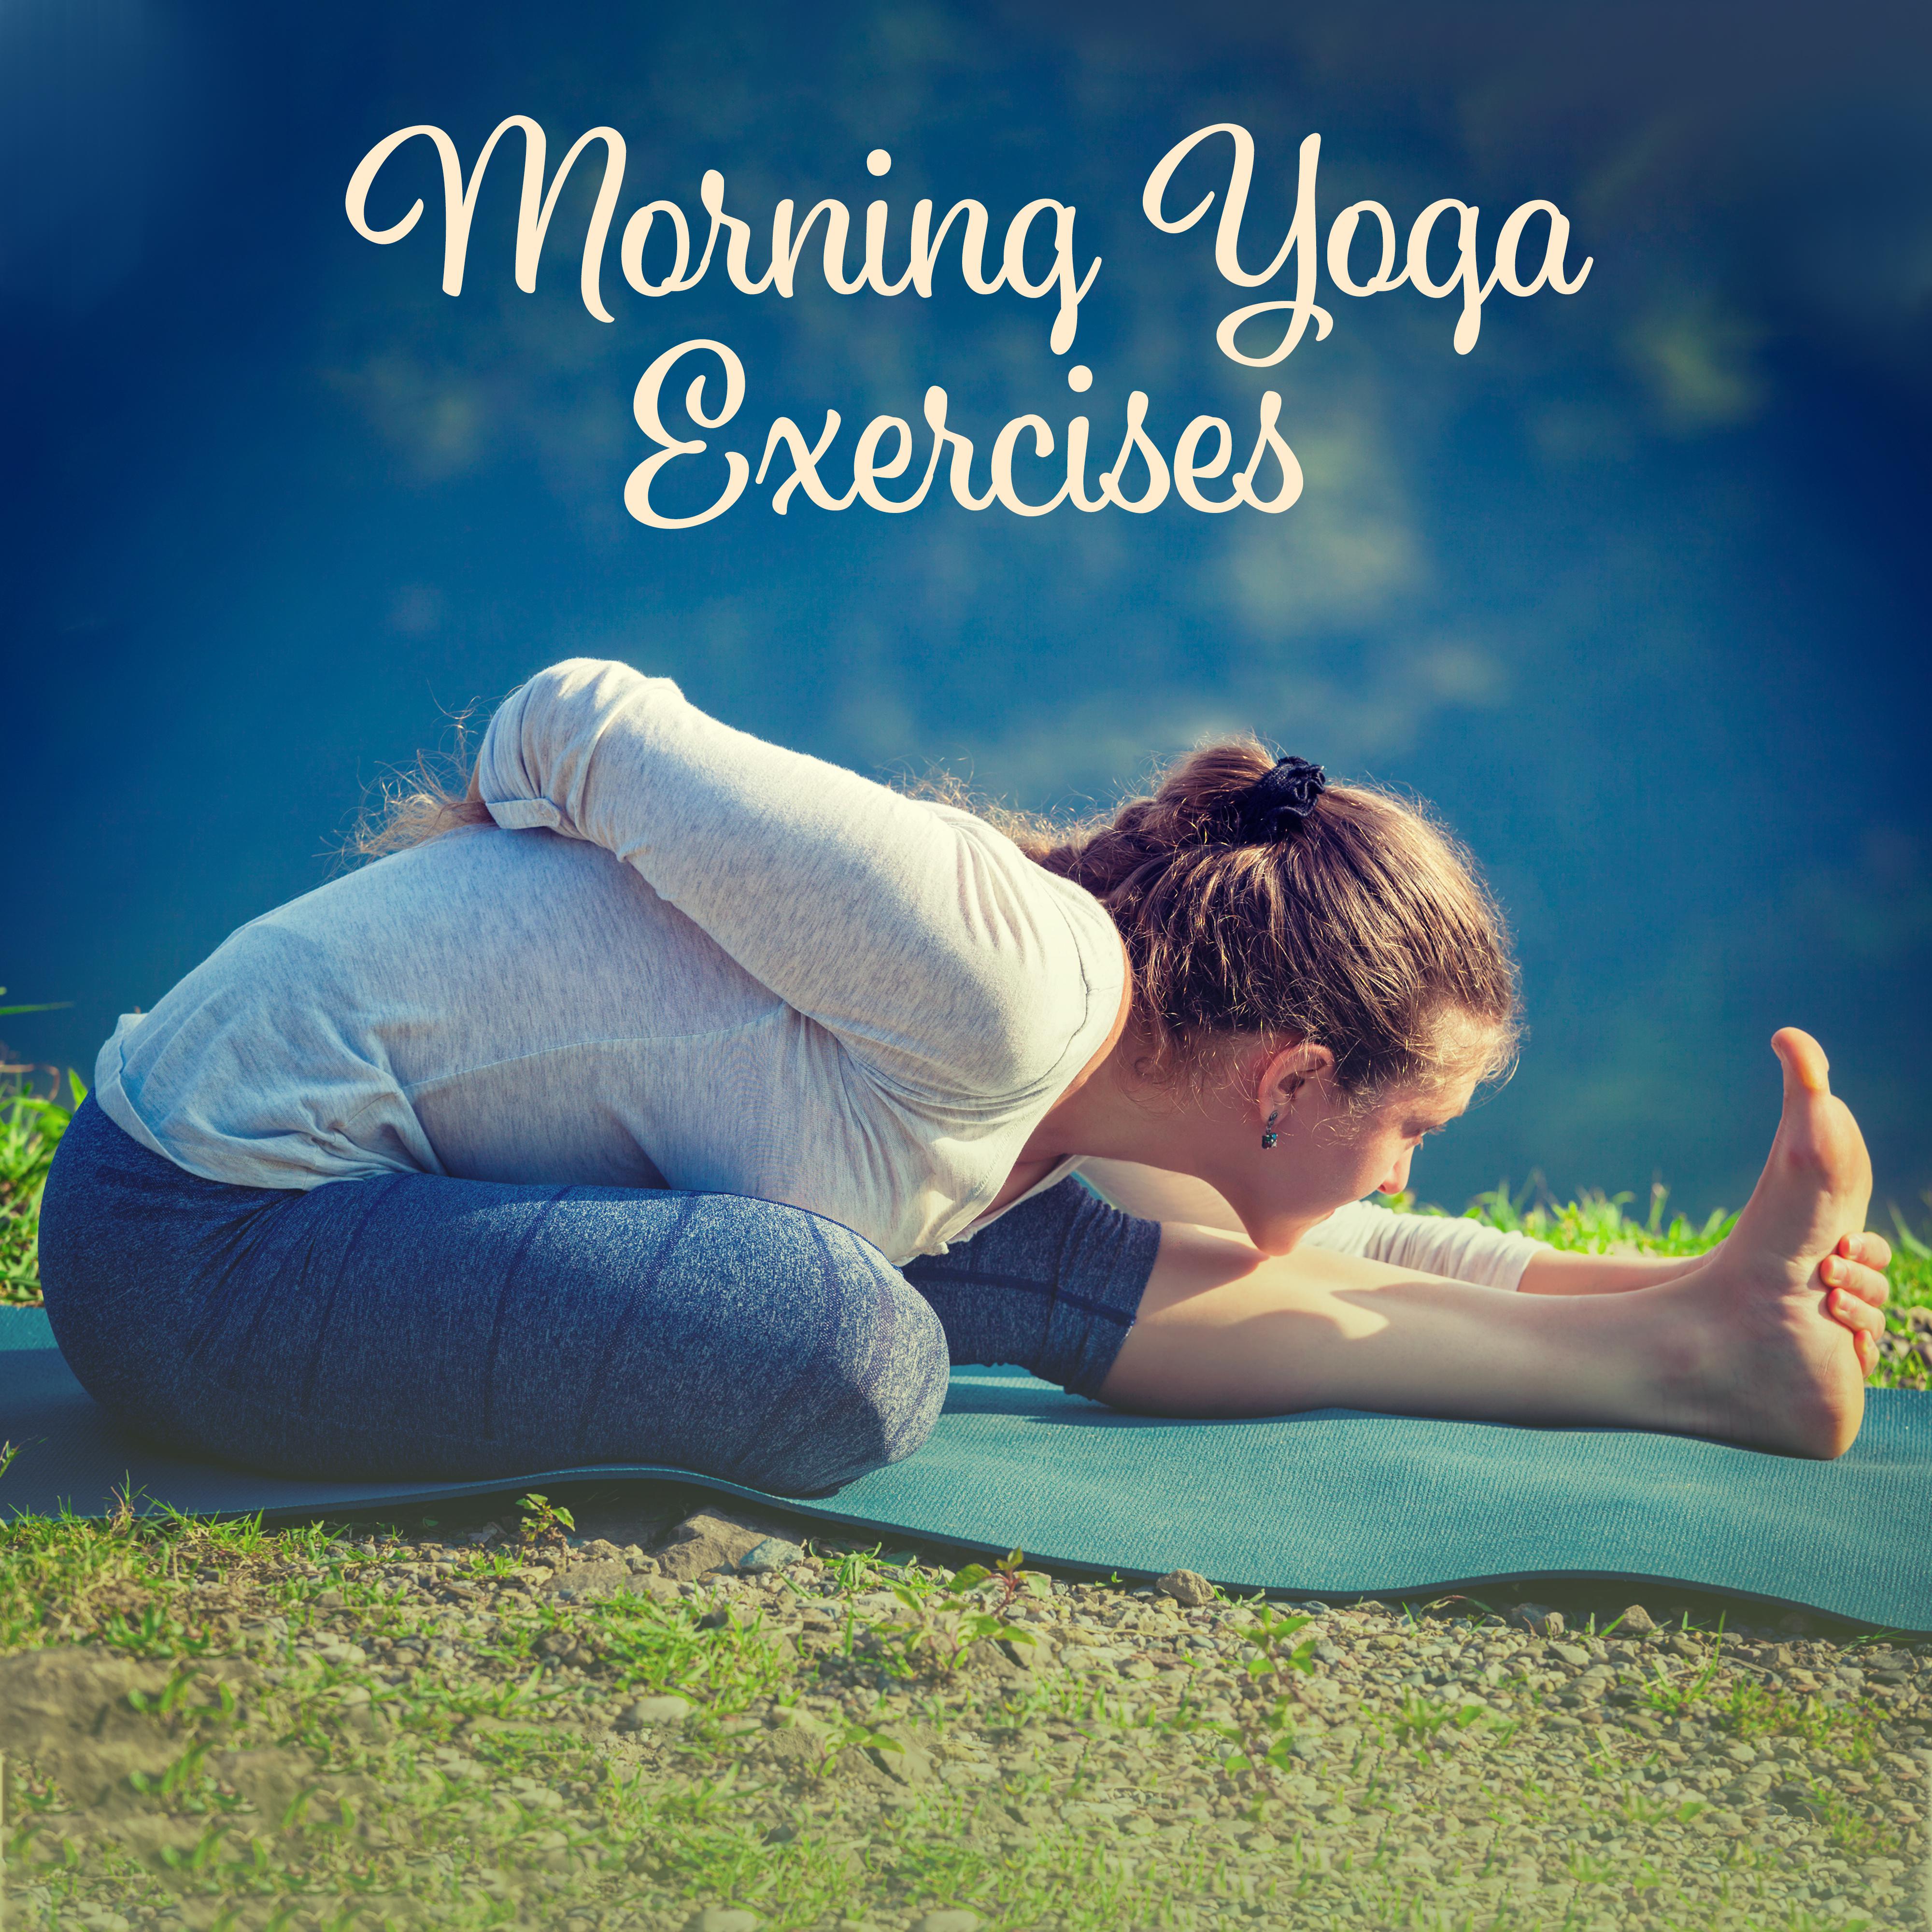 Morning Yoga Exercises: Meditation Music Zone, Stress Relief, Yoga Meditation, Chakra Balancing, Yoga Pose Collection, Zen Buddhist Therapy, Calm Down